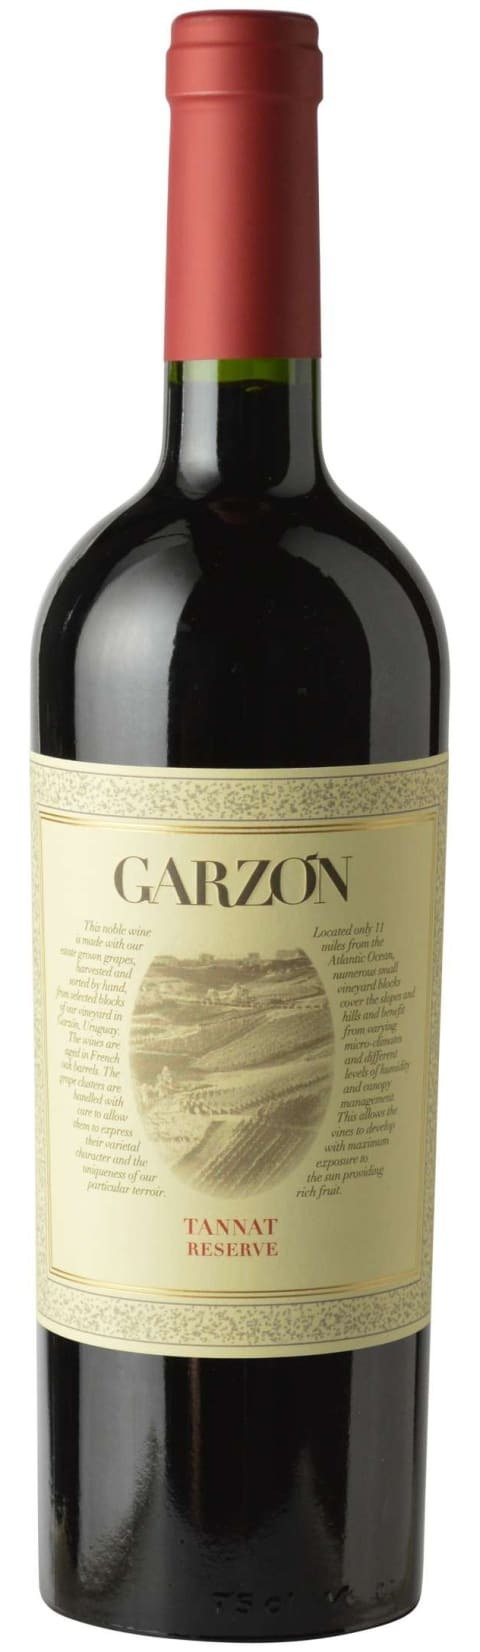 Bodega Garzon Uruguay Reserva Tannat 2019 红葡萄酒